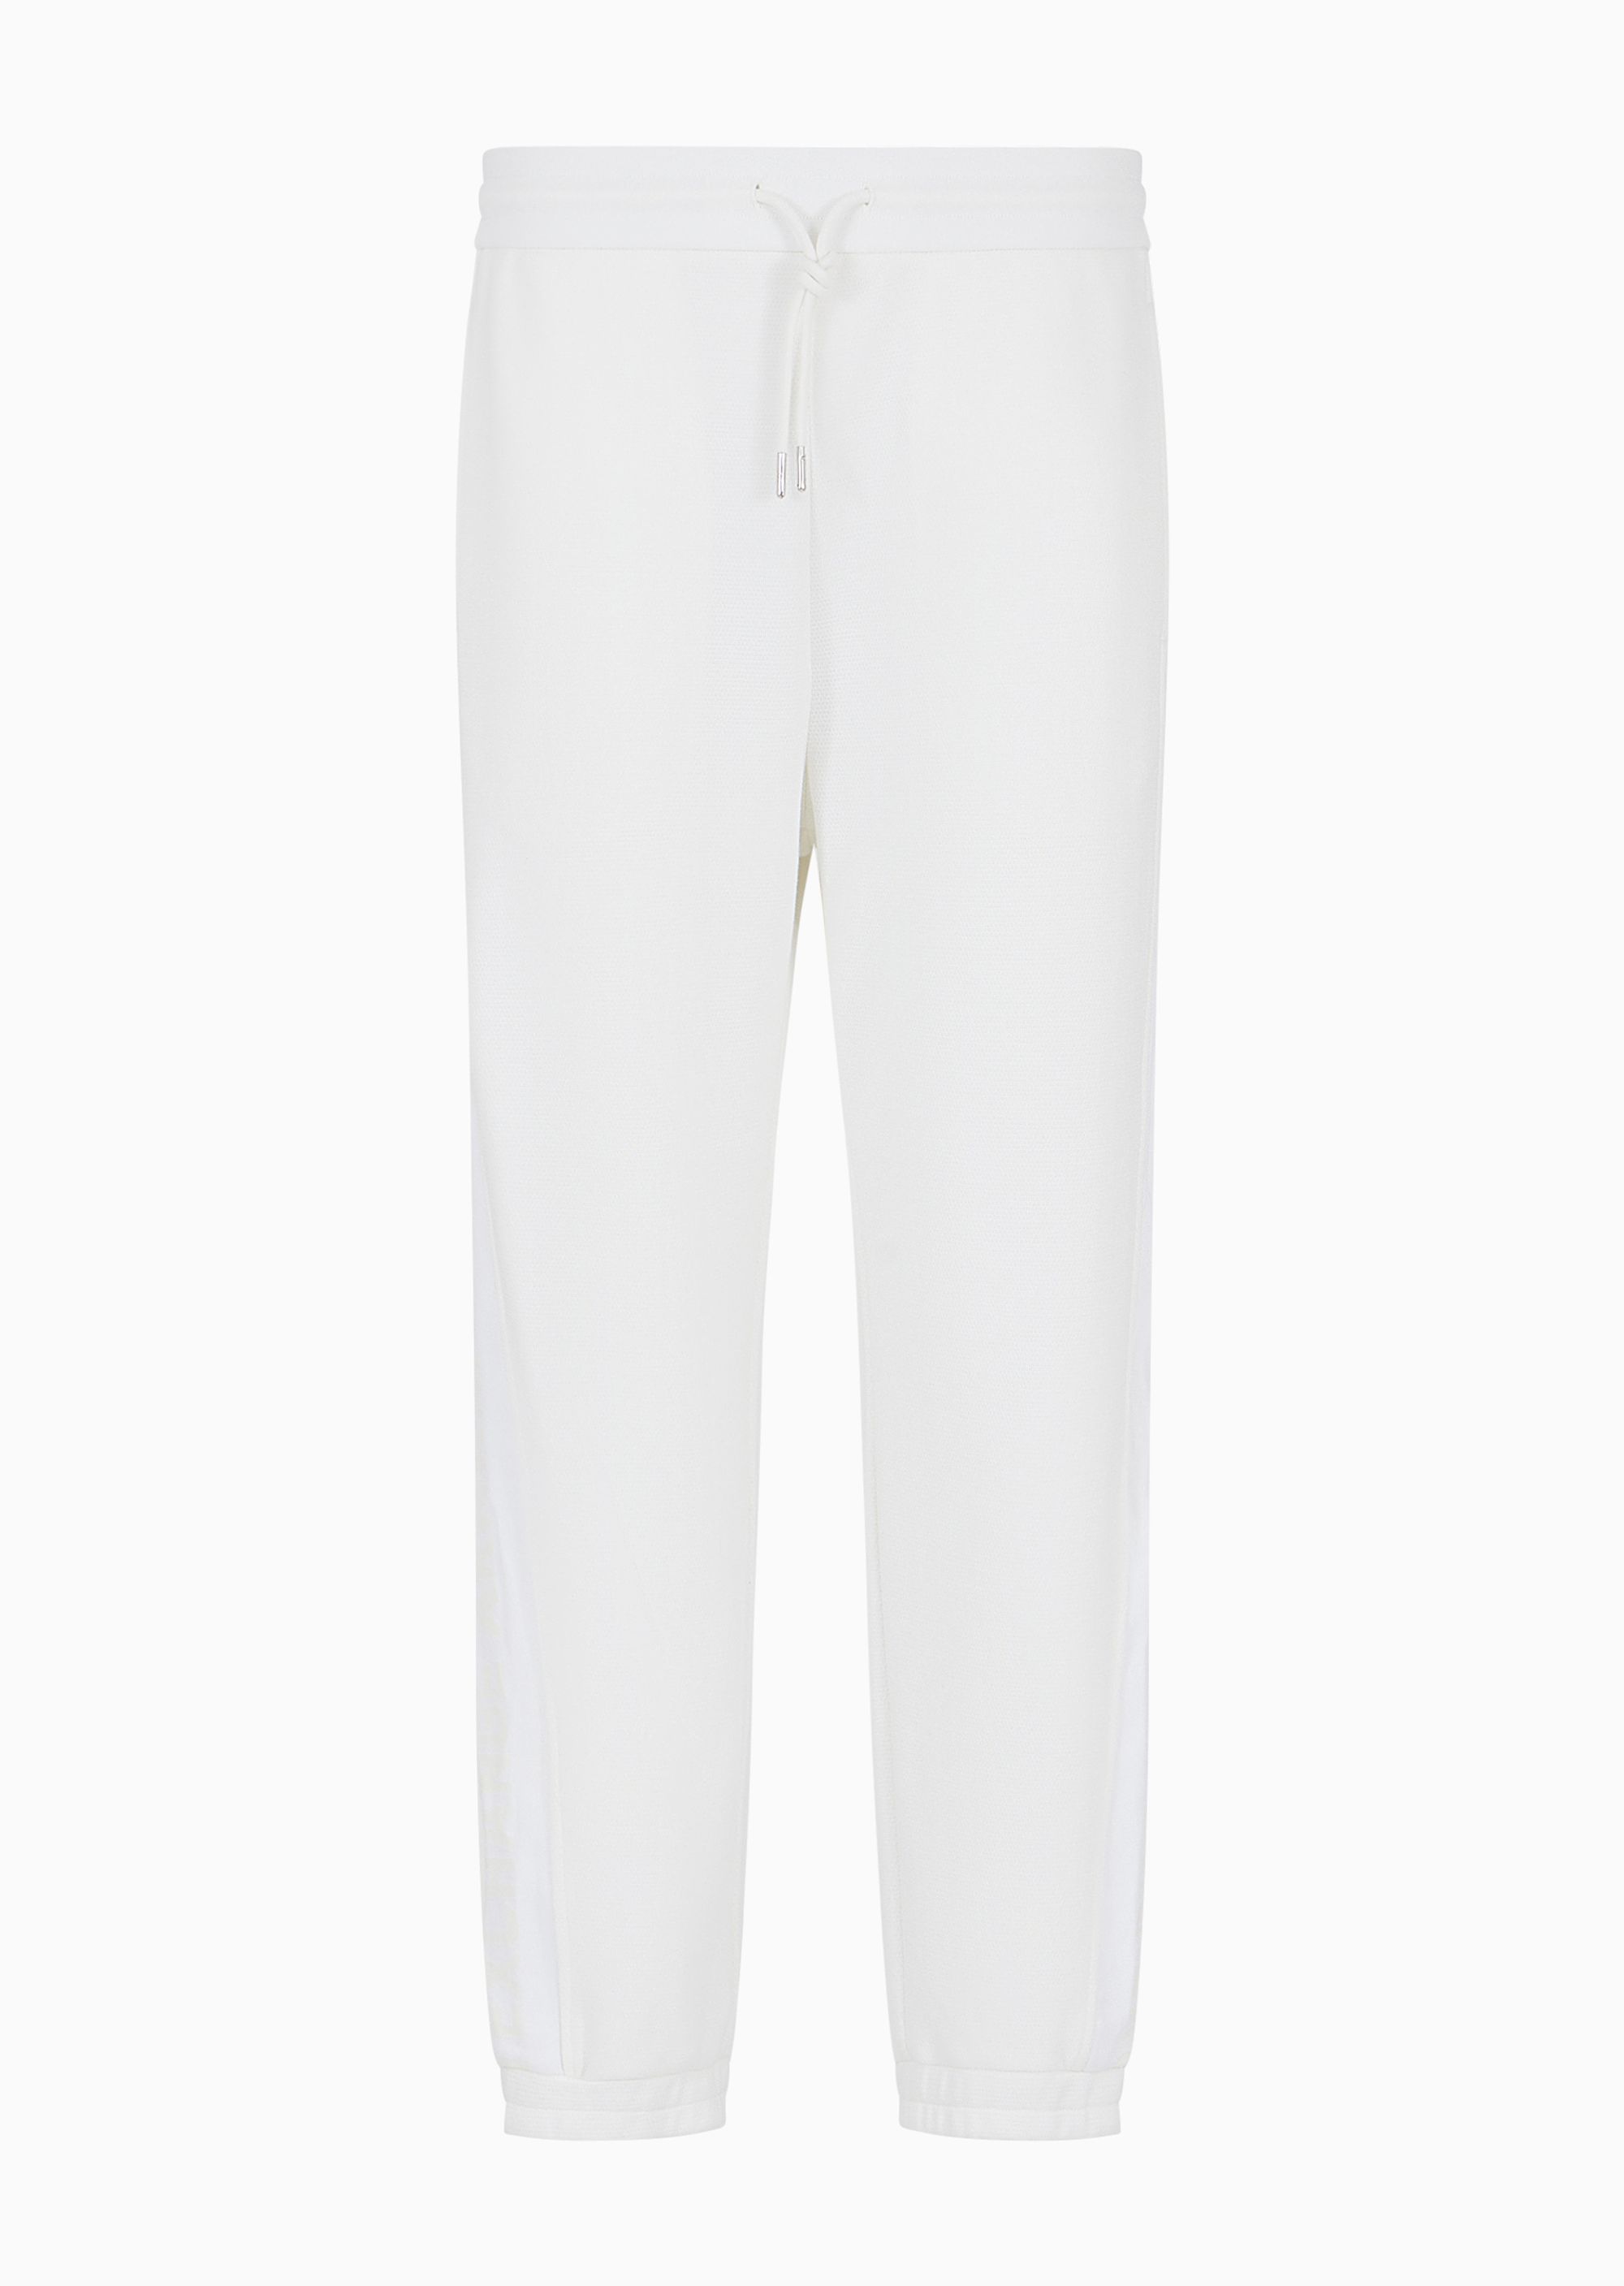 Спортивные брюки Armani Exchange, белый